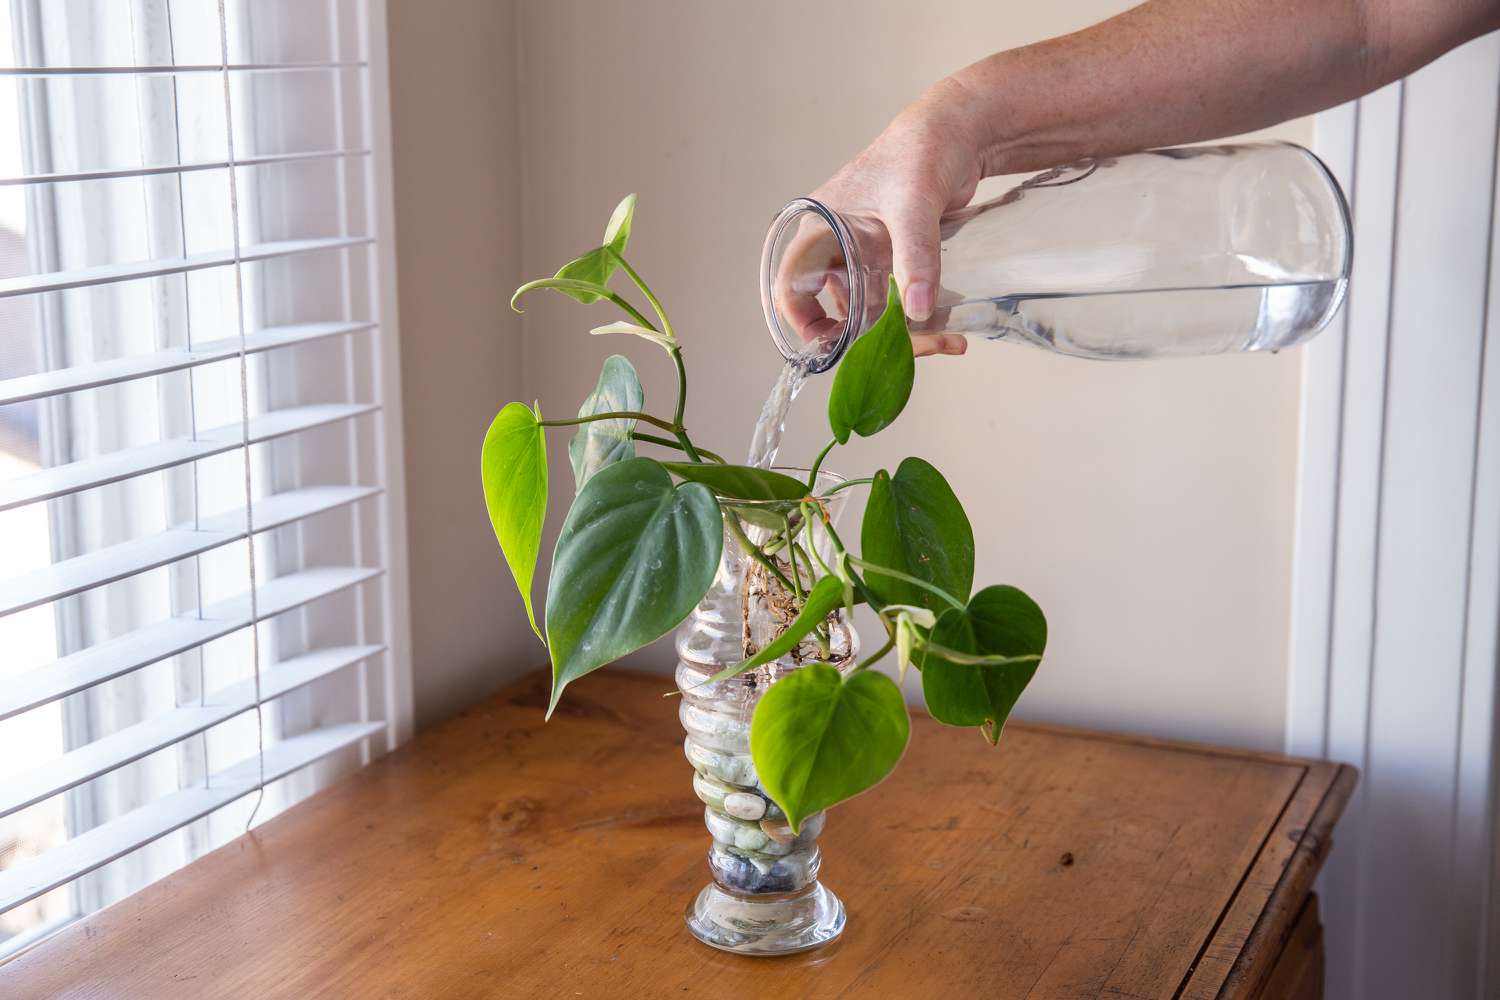 Vaso de vidro com planta pothos cheia de água